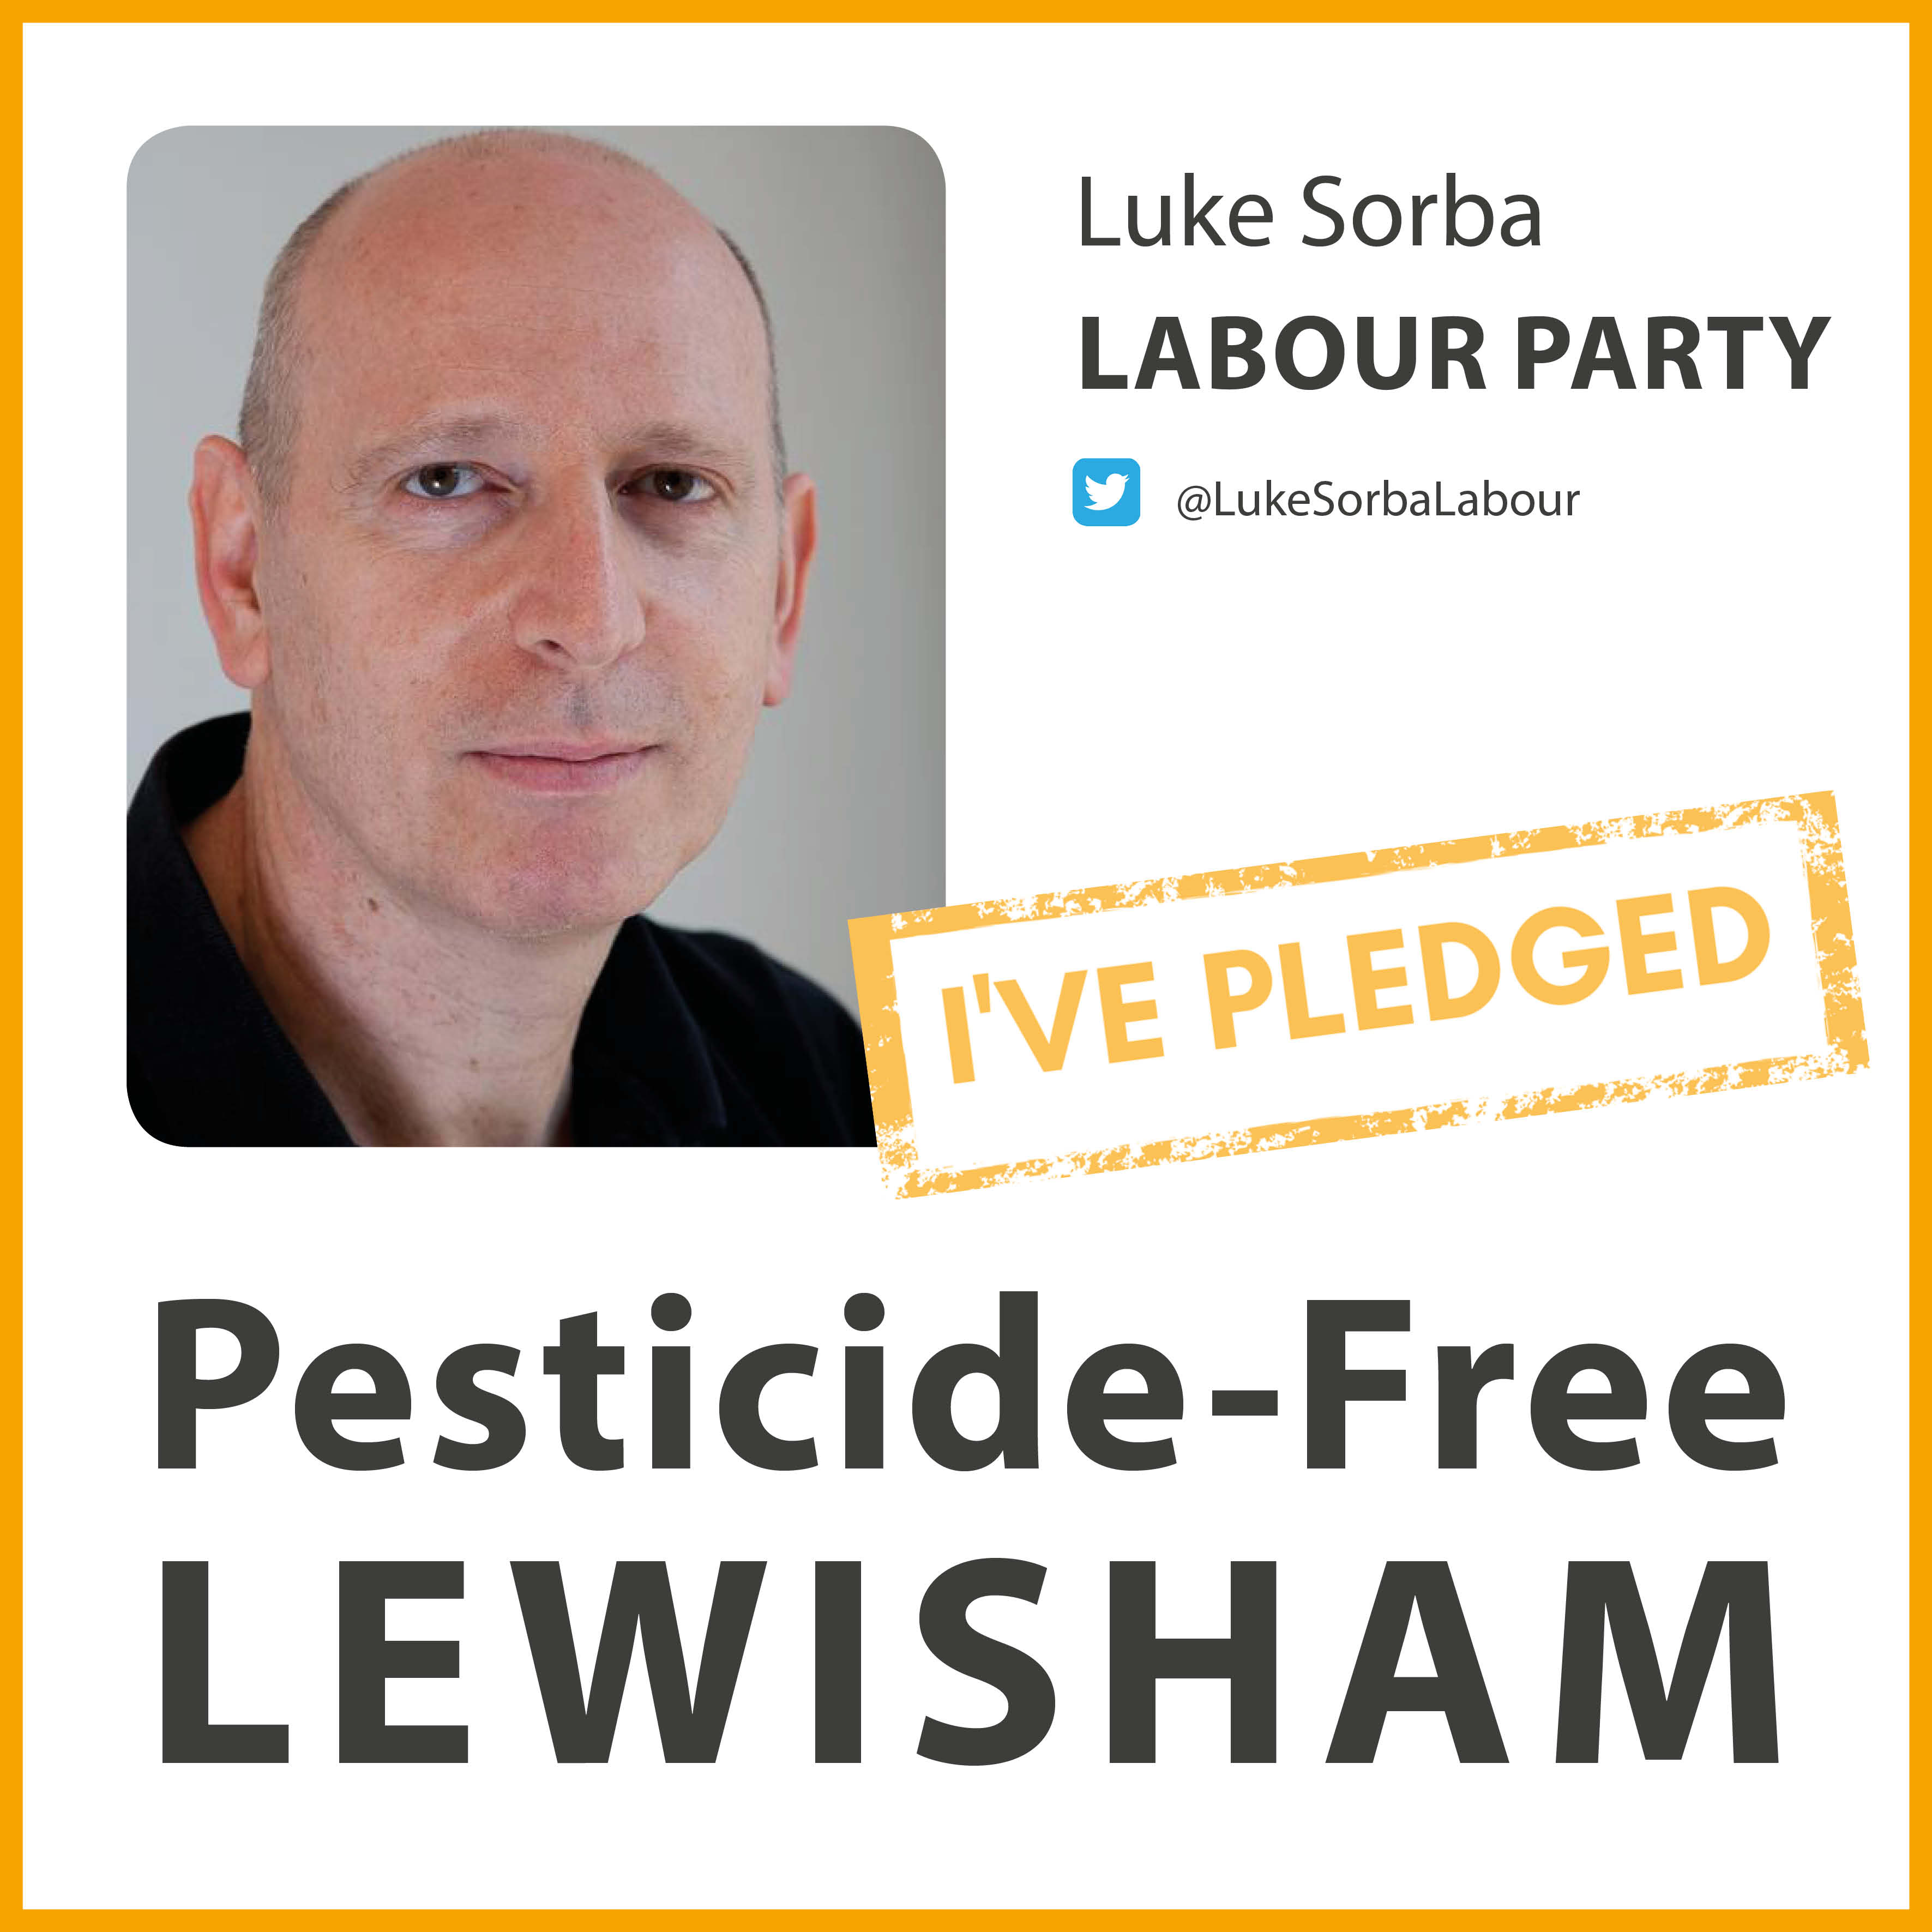 Luke Sorba has taken the pesticide-free pledge in Lewisham